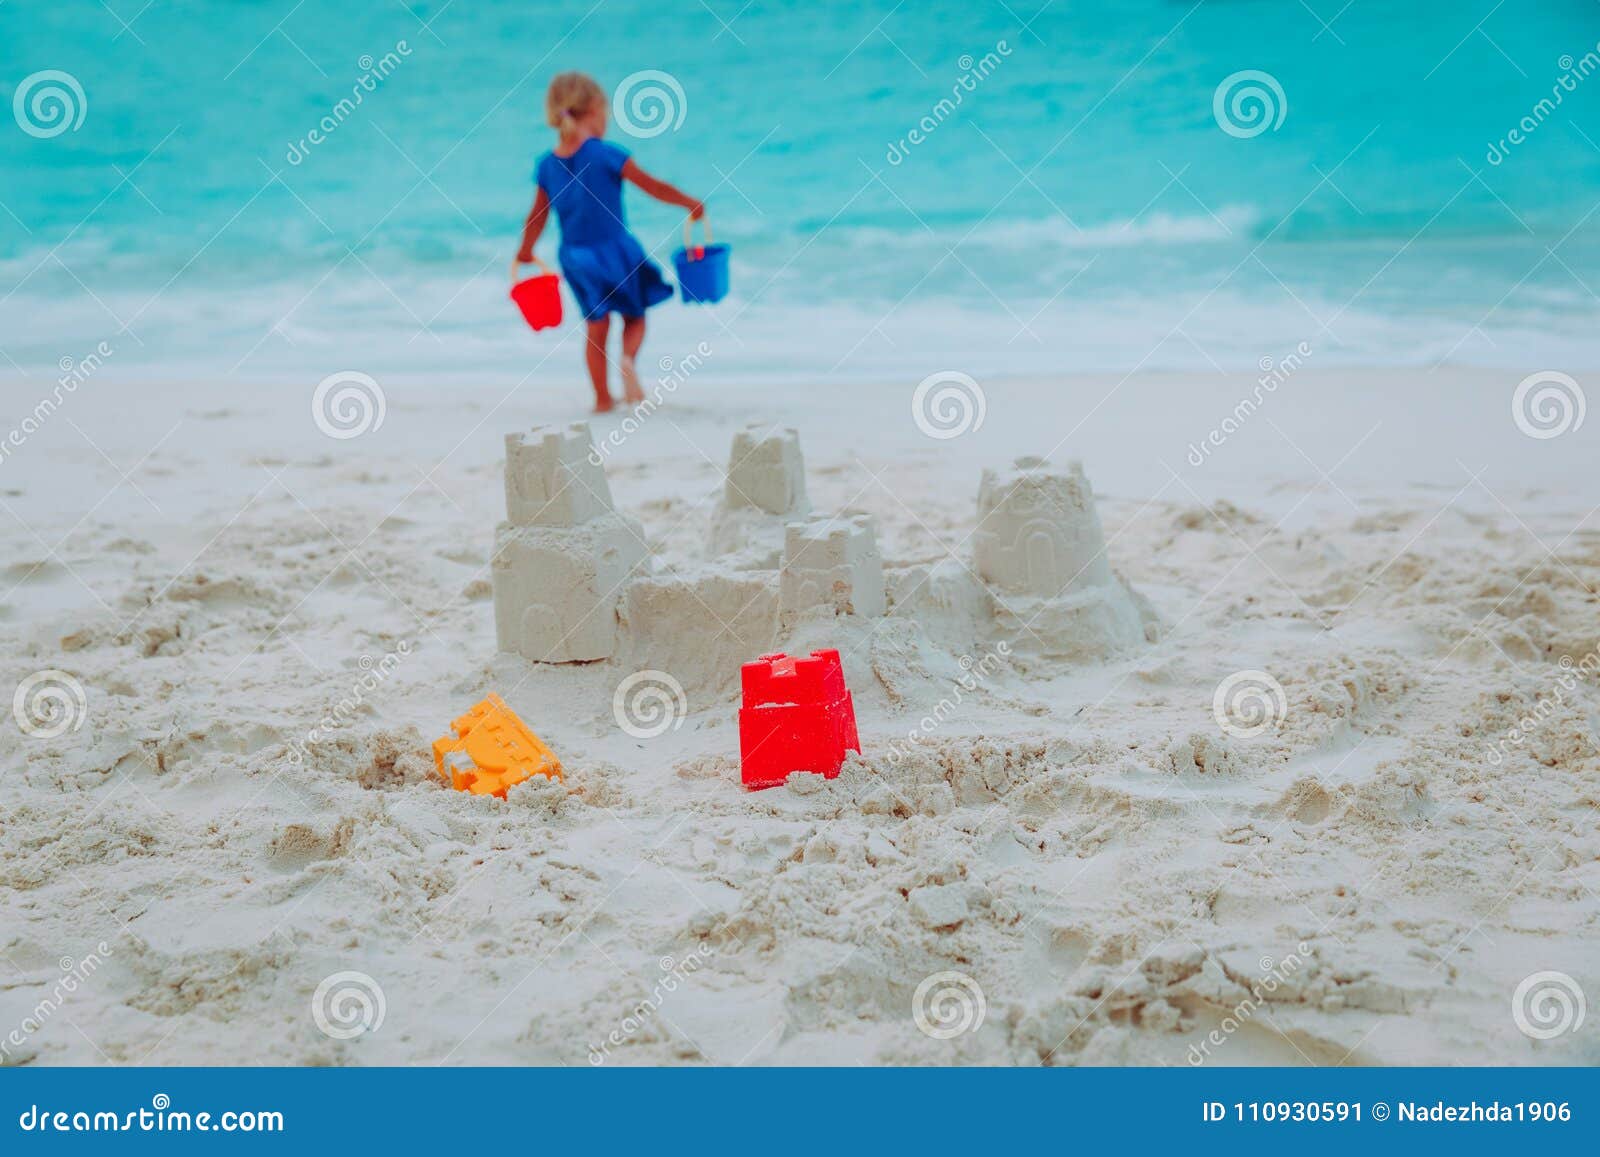 Little Girl Building Sand Castle on Beach Stock Image - Image of ...